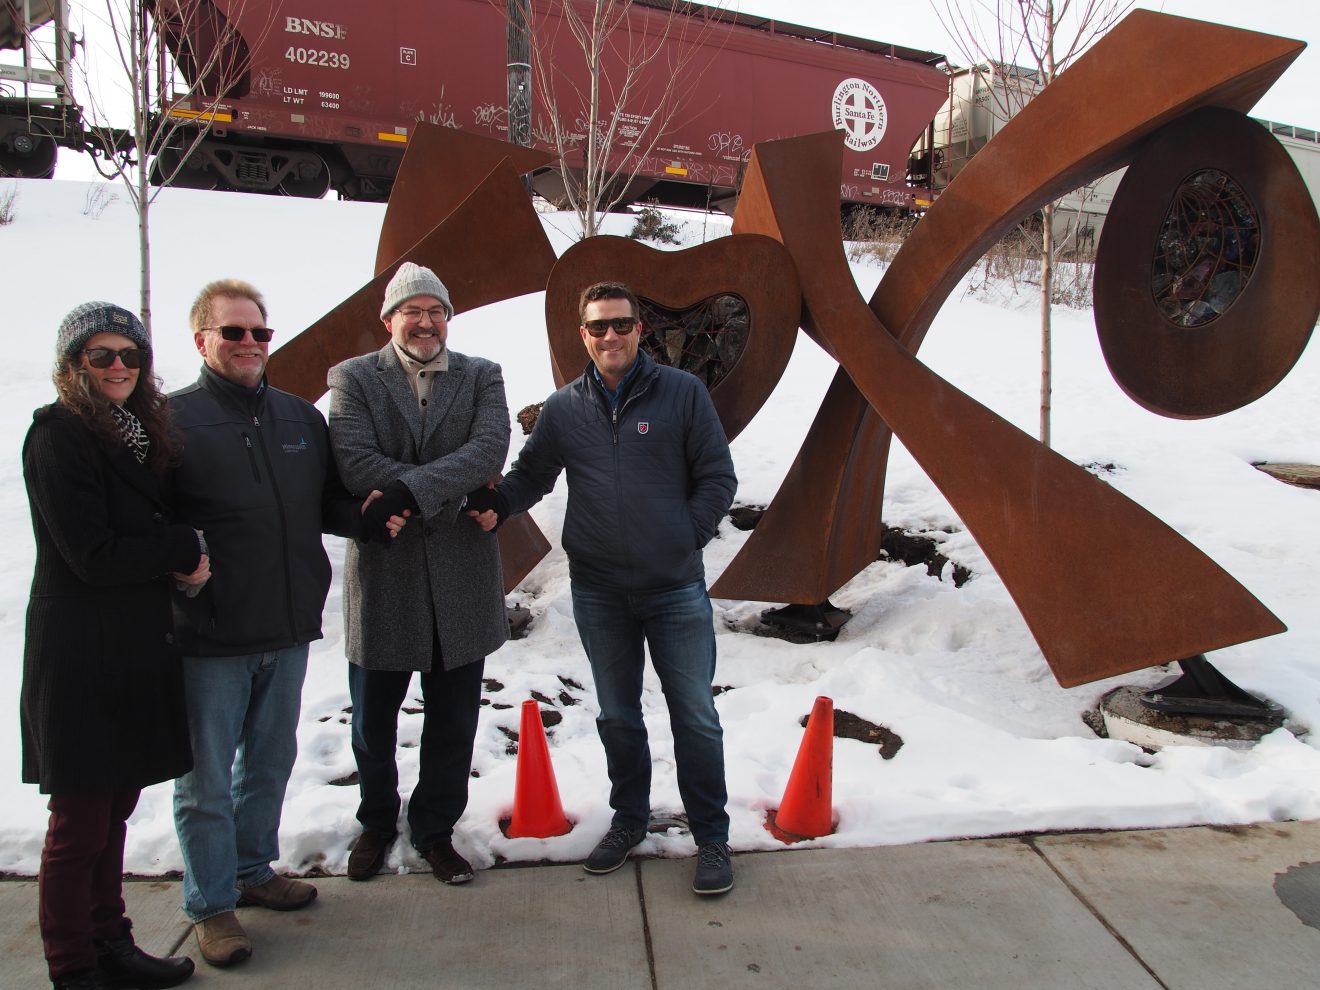 JROW sculpture walk's potential celebrated